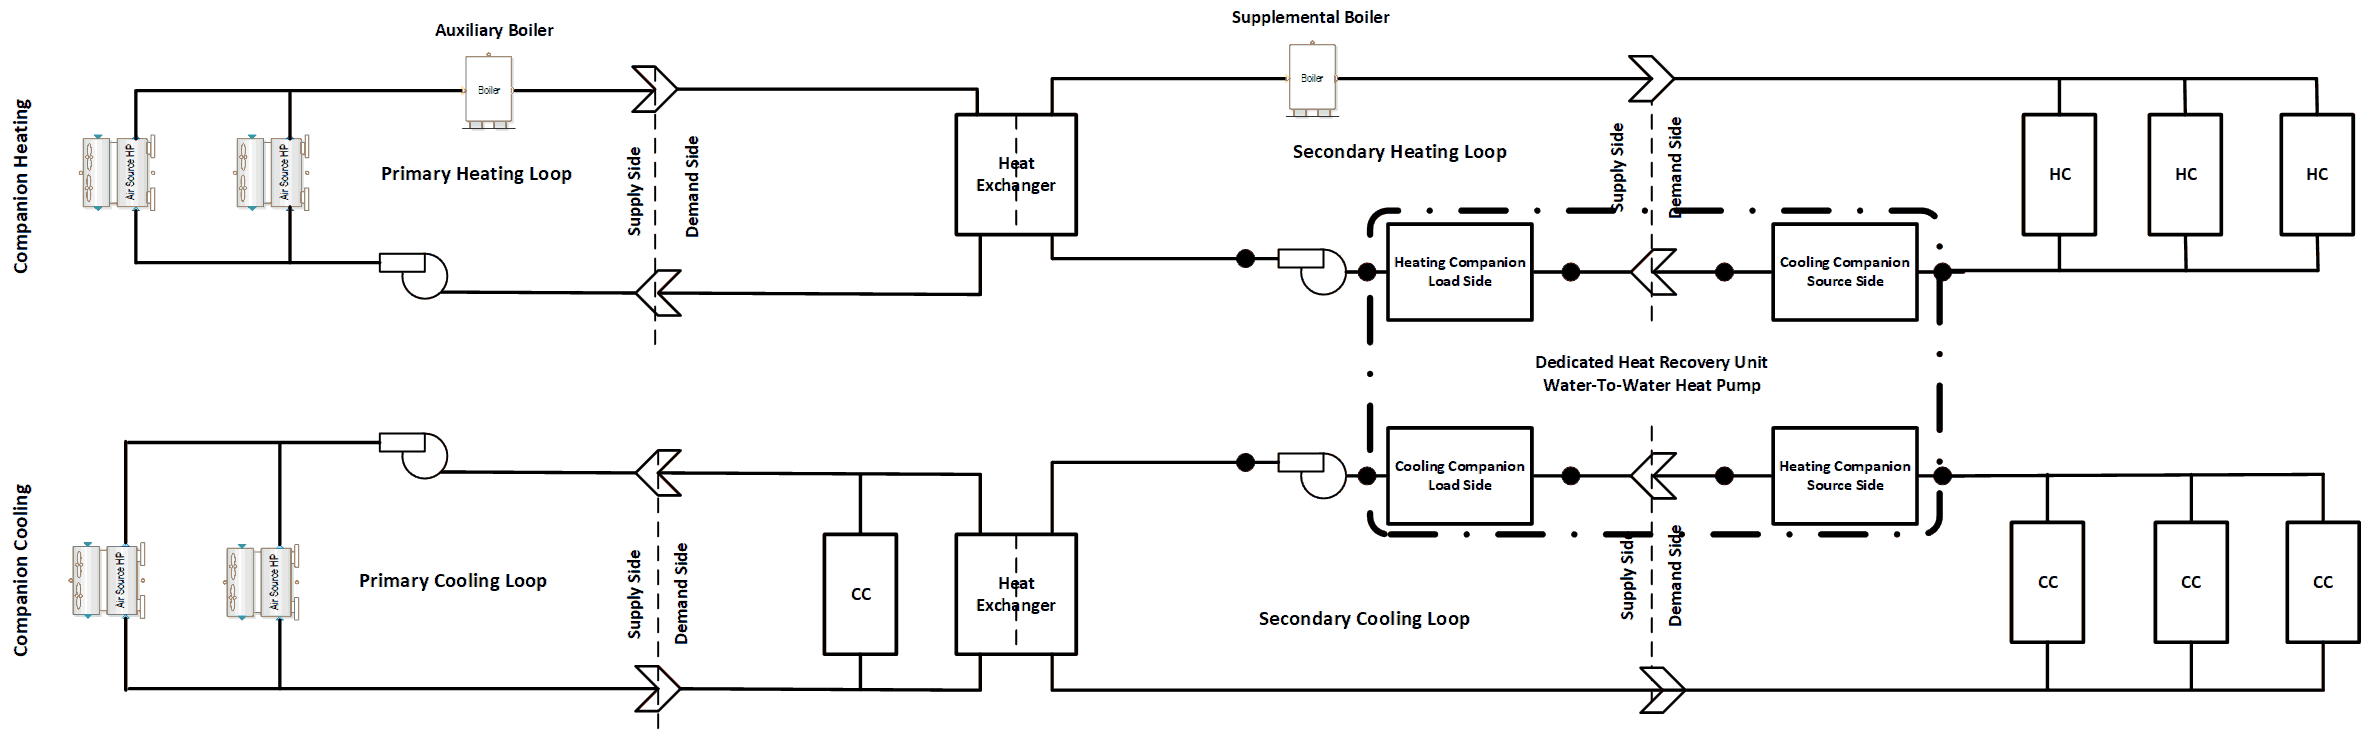 Plant Configuration for Air Source Heat Pump Supervisory Control